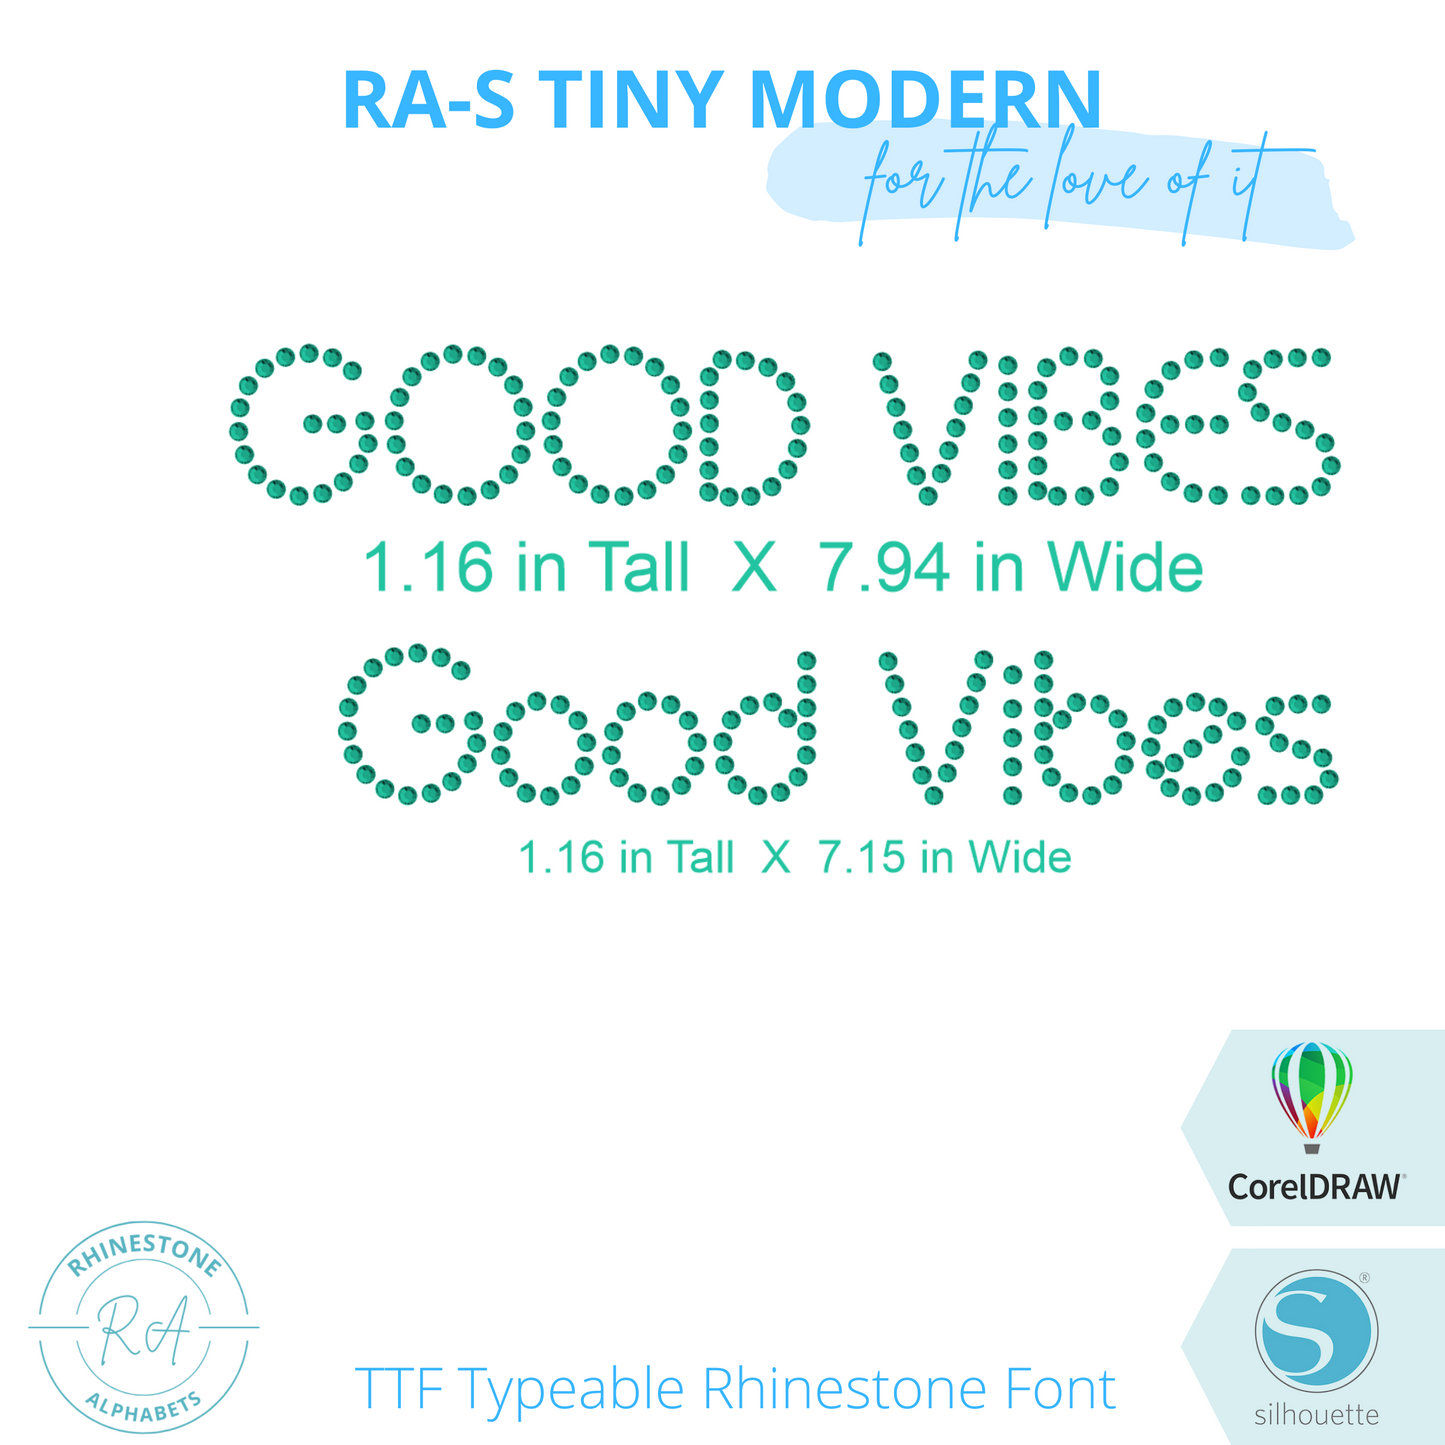 RA-S Tiny Modern - RhinestoneAlphabets